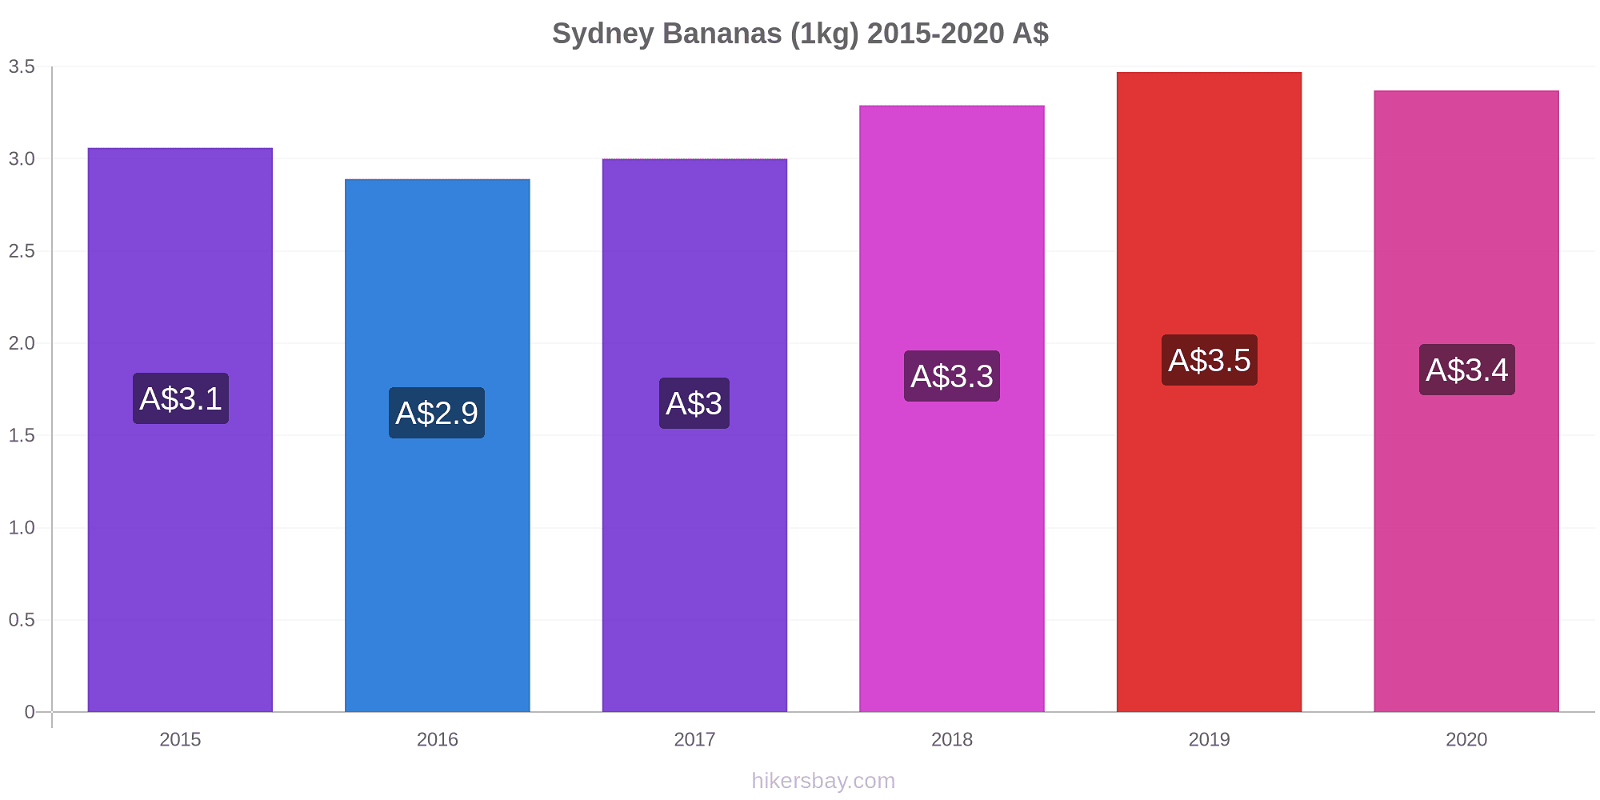 Sydney price changes Bananas (1kg) hikersbay.com